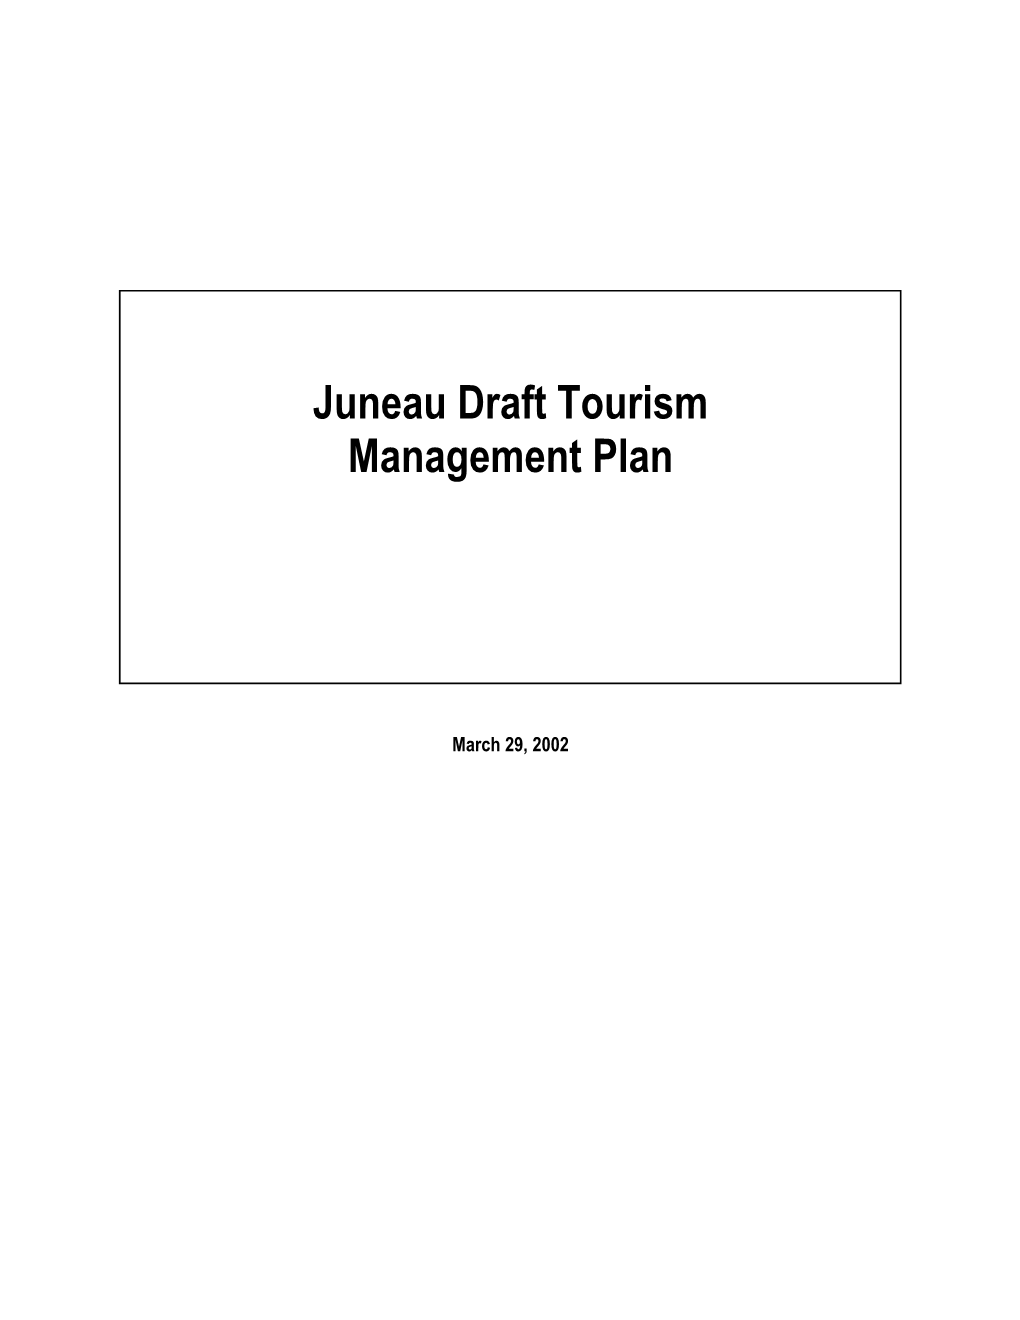 Juneau Draft Tourism Management Plan